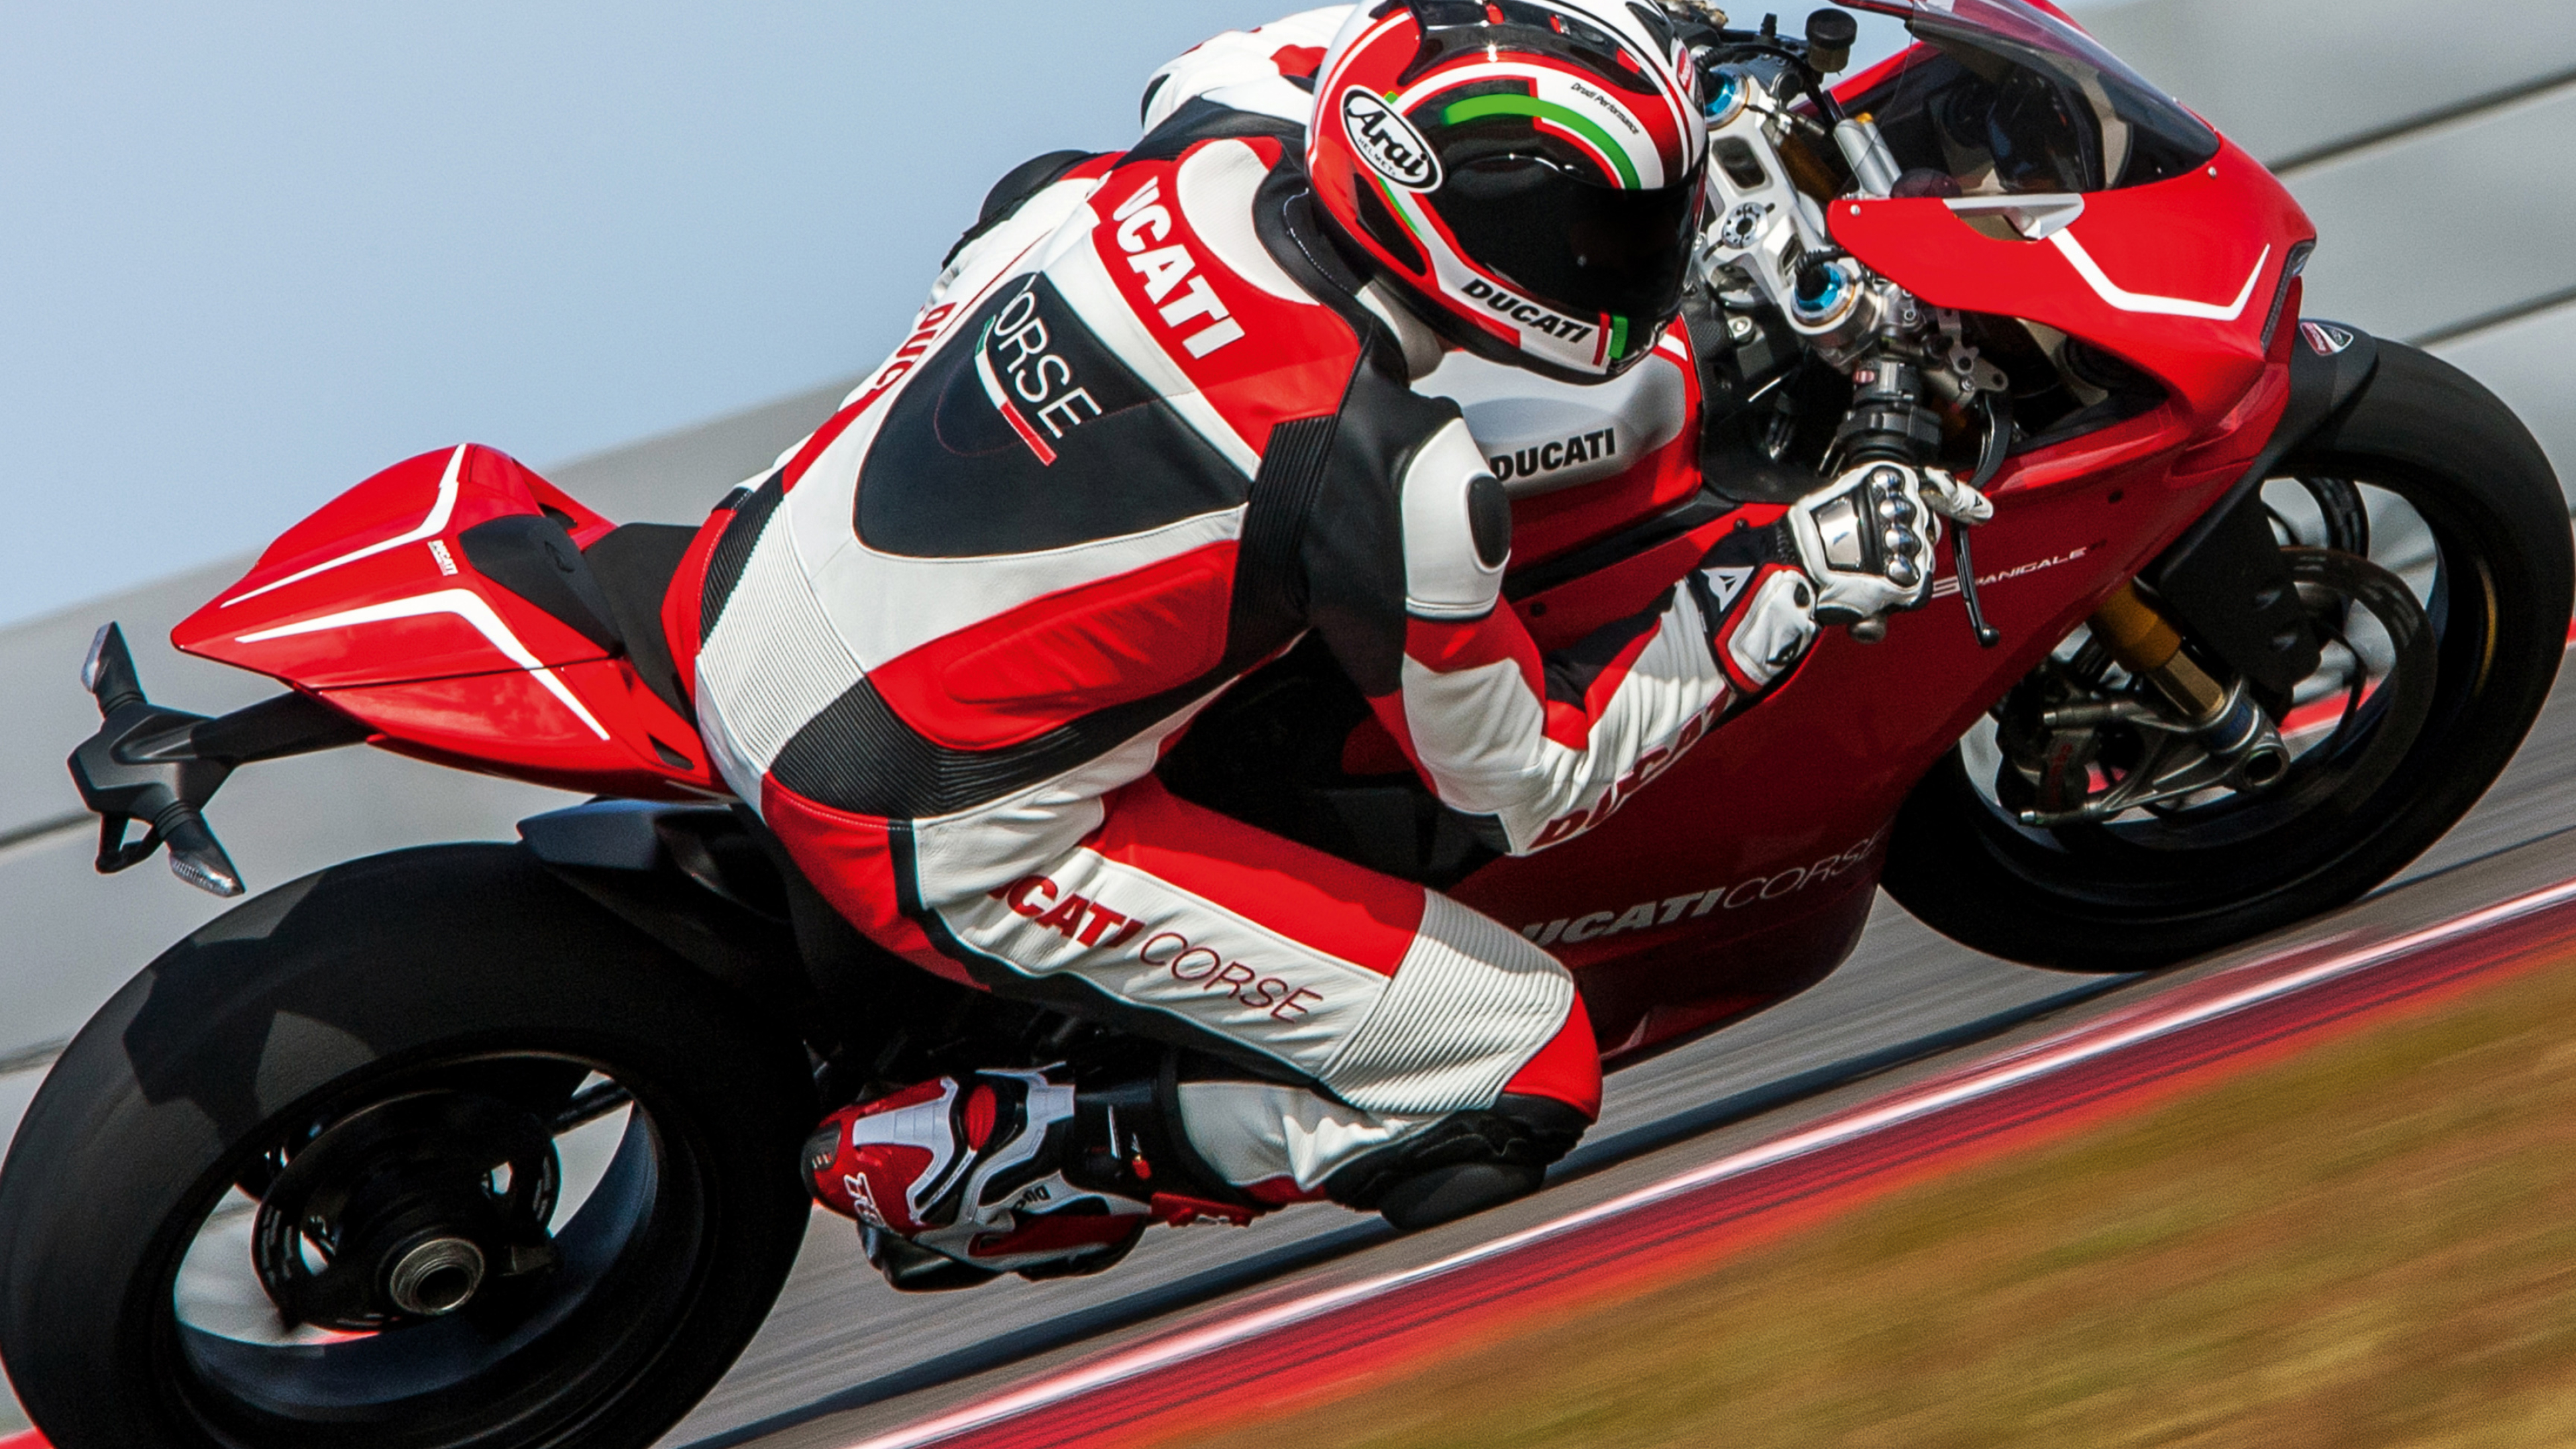 Motorcycle Racing: Ducati Panigale, Good Sense of Speed and Balance, Ducati Superbike 1199. 3840x2160 4K Wallpaper.